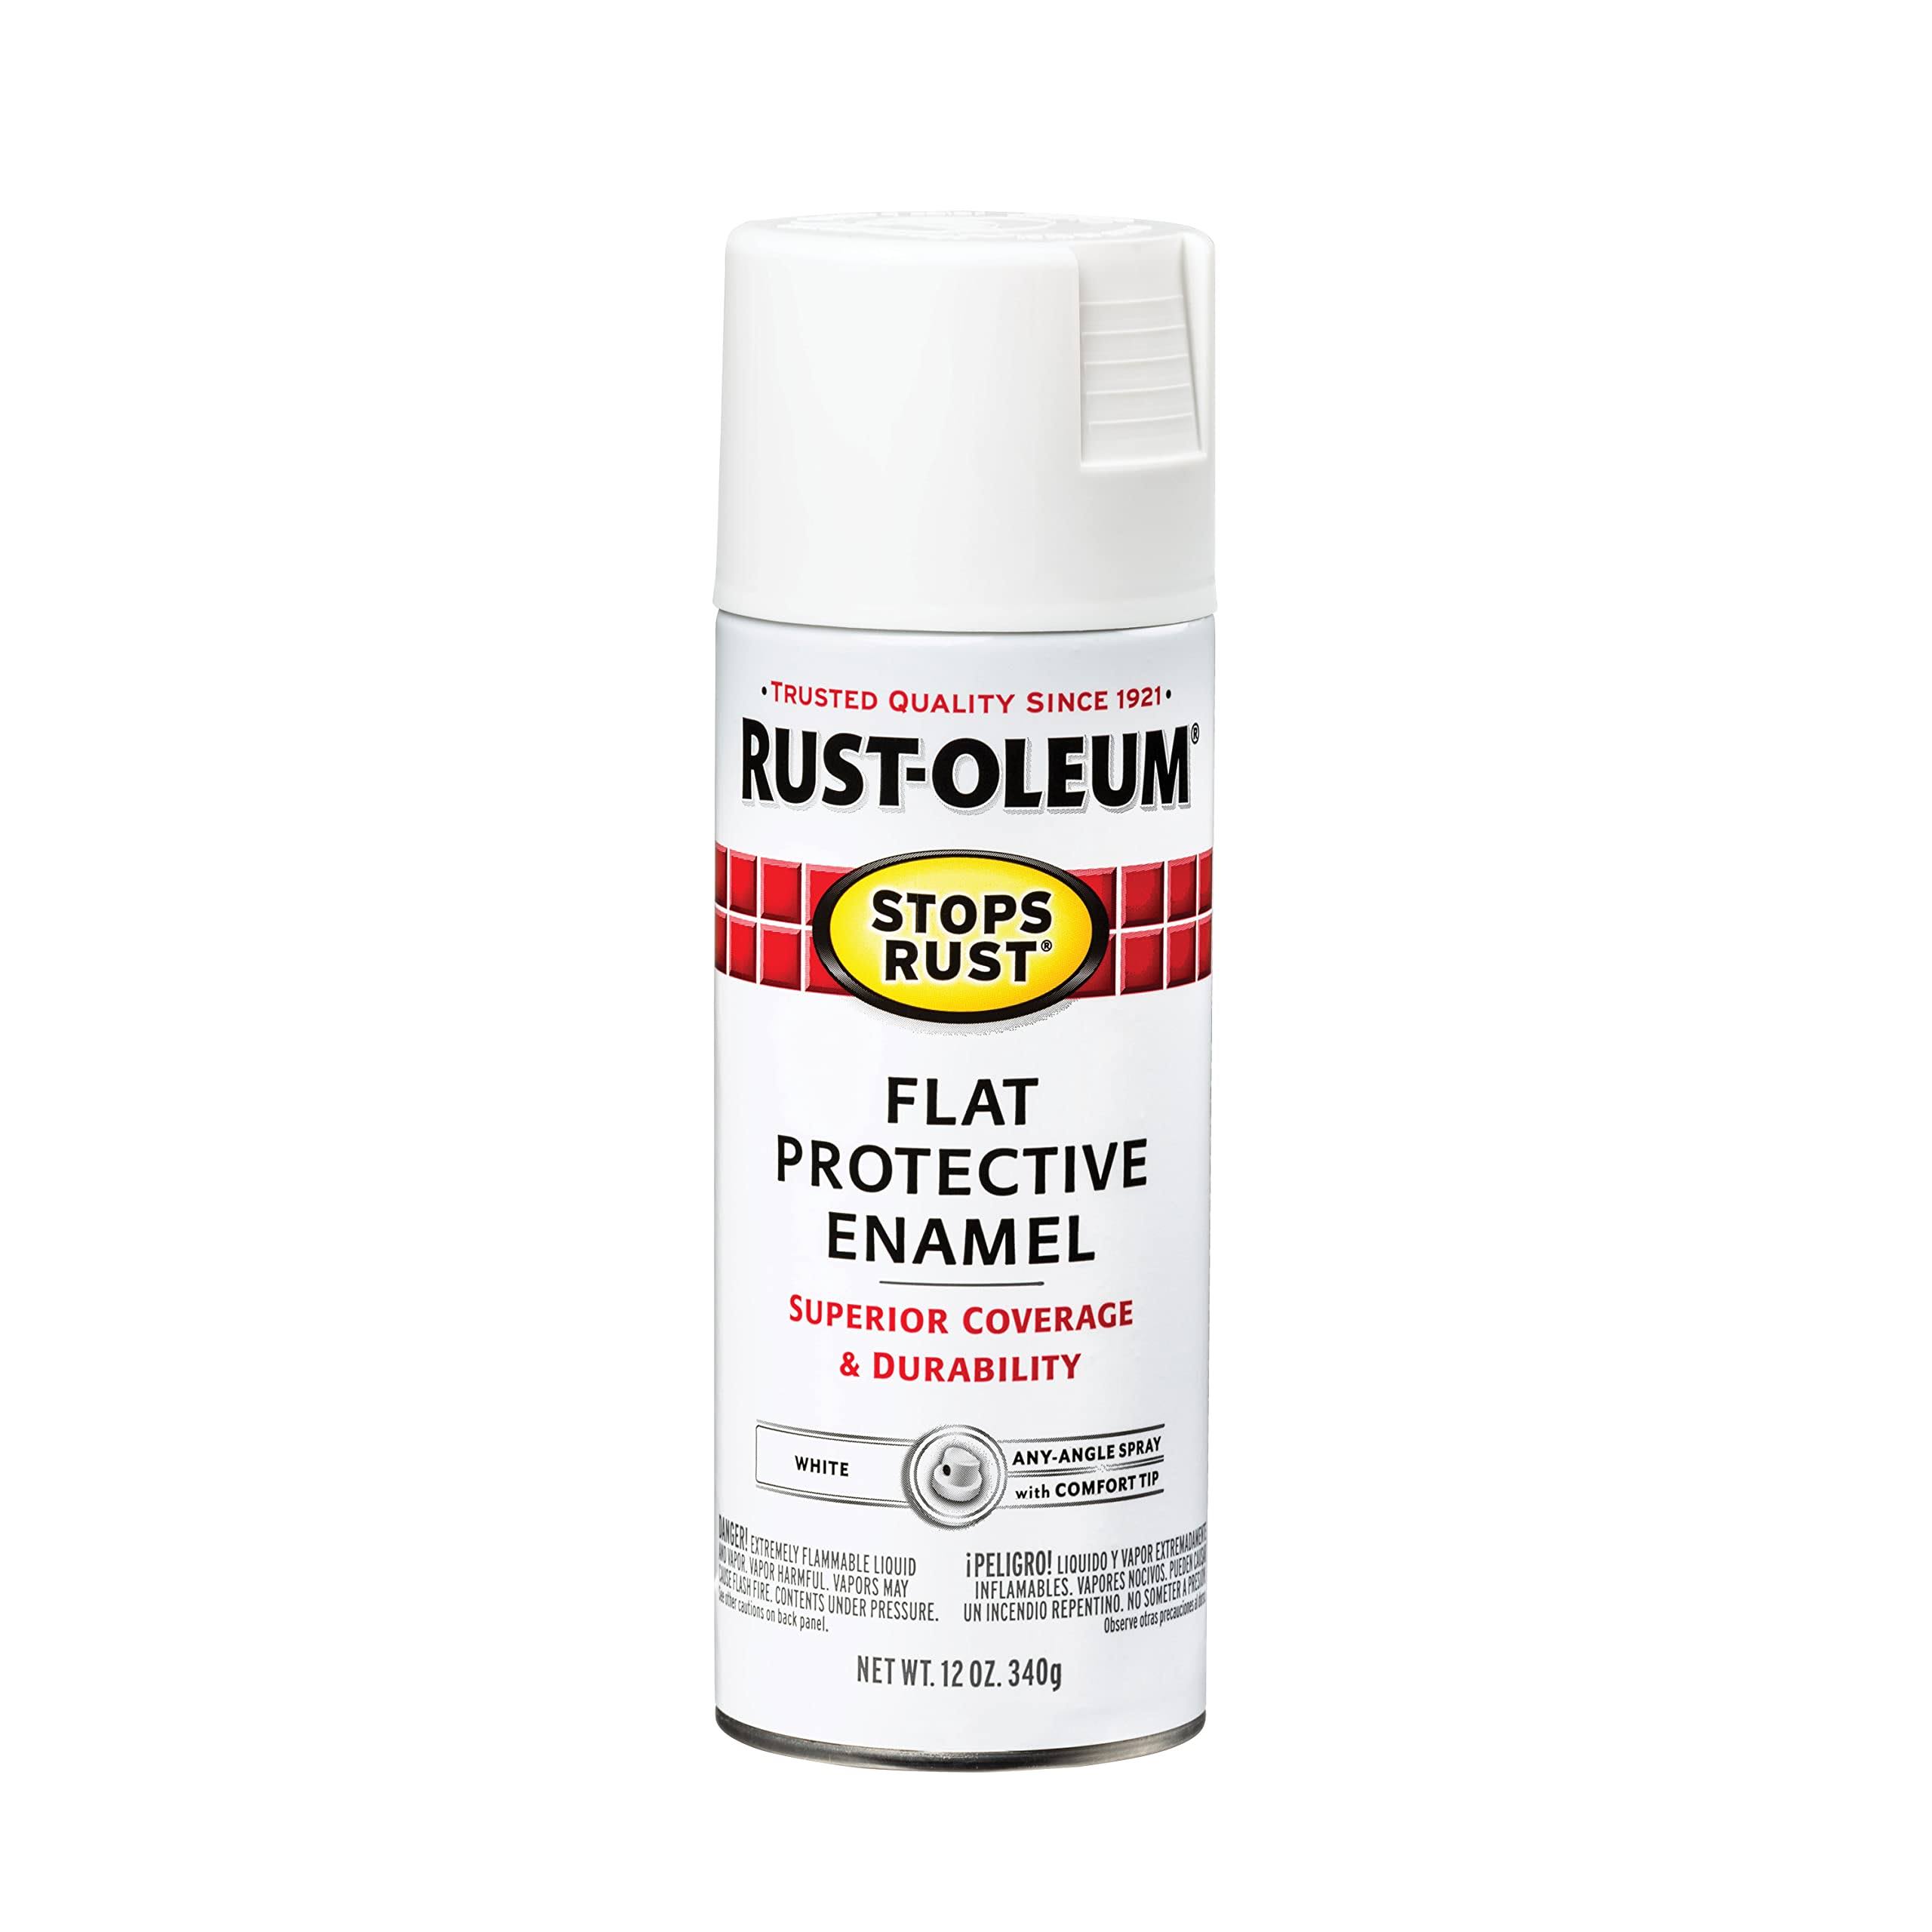 Rust-Oleum Stops Rust Flat Protective Enamel Spray - White, 12oz